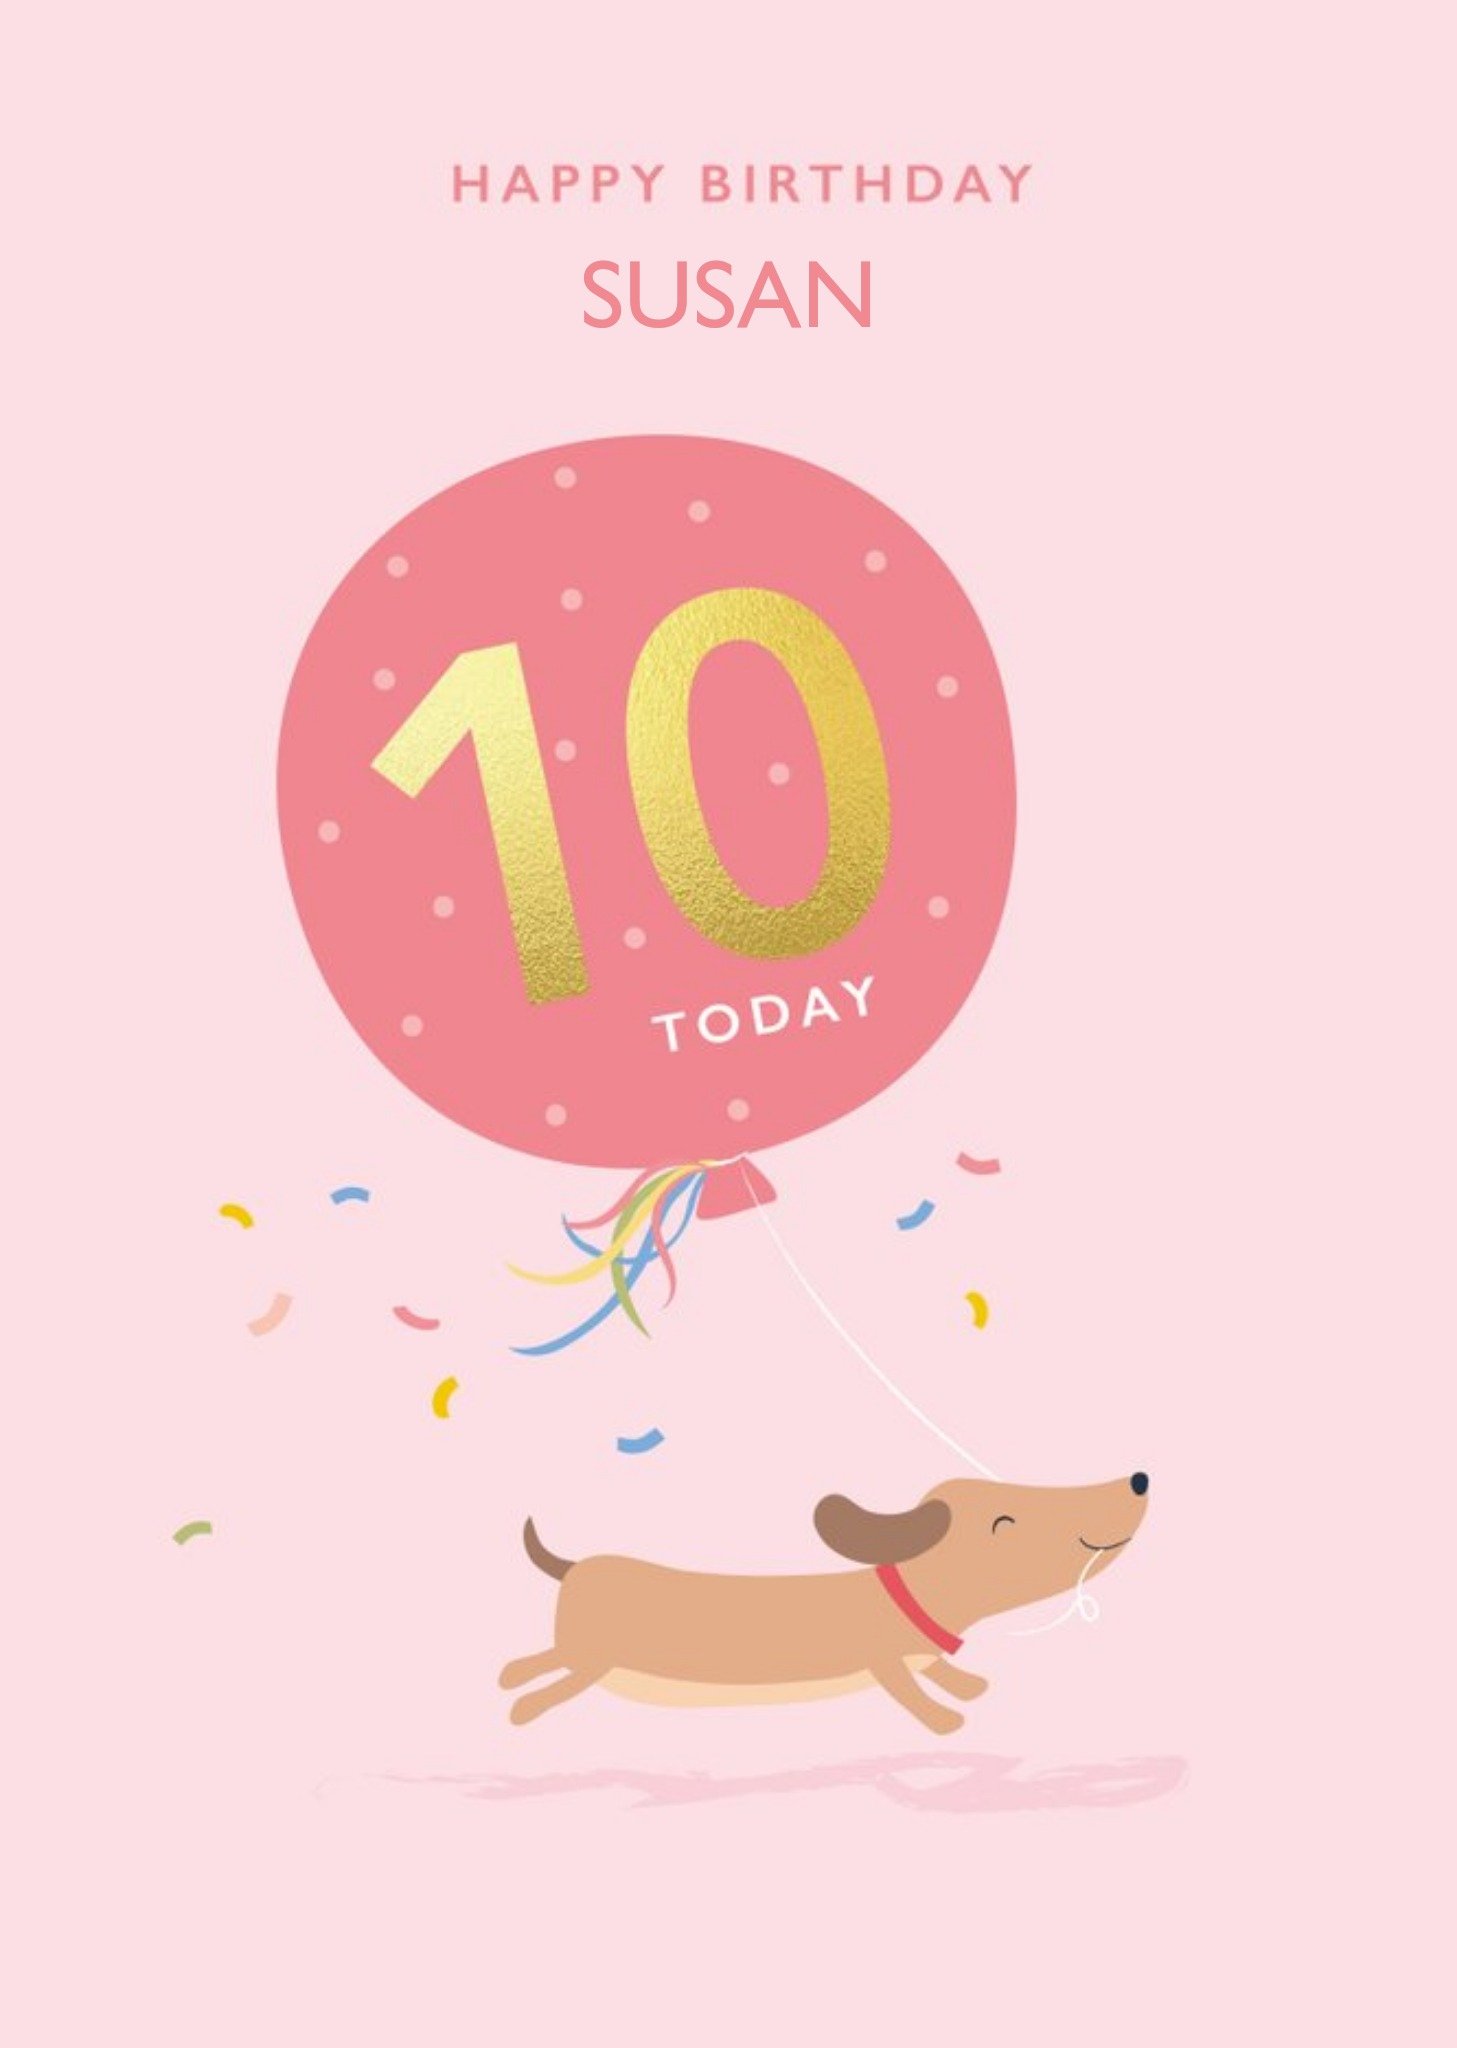 Moonpig Cute Illustration Sausage Dog Balloon 10 Today Female Birthday Card, Large